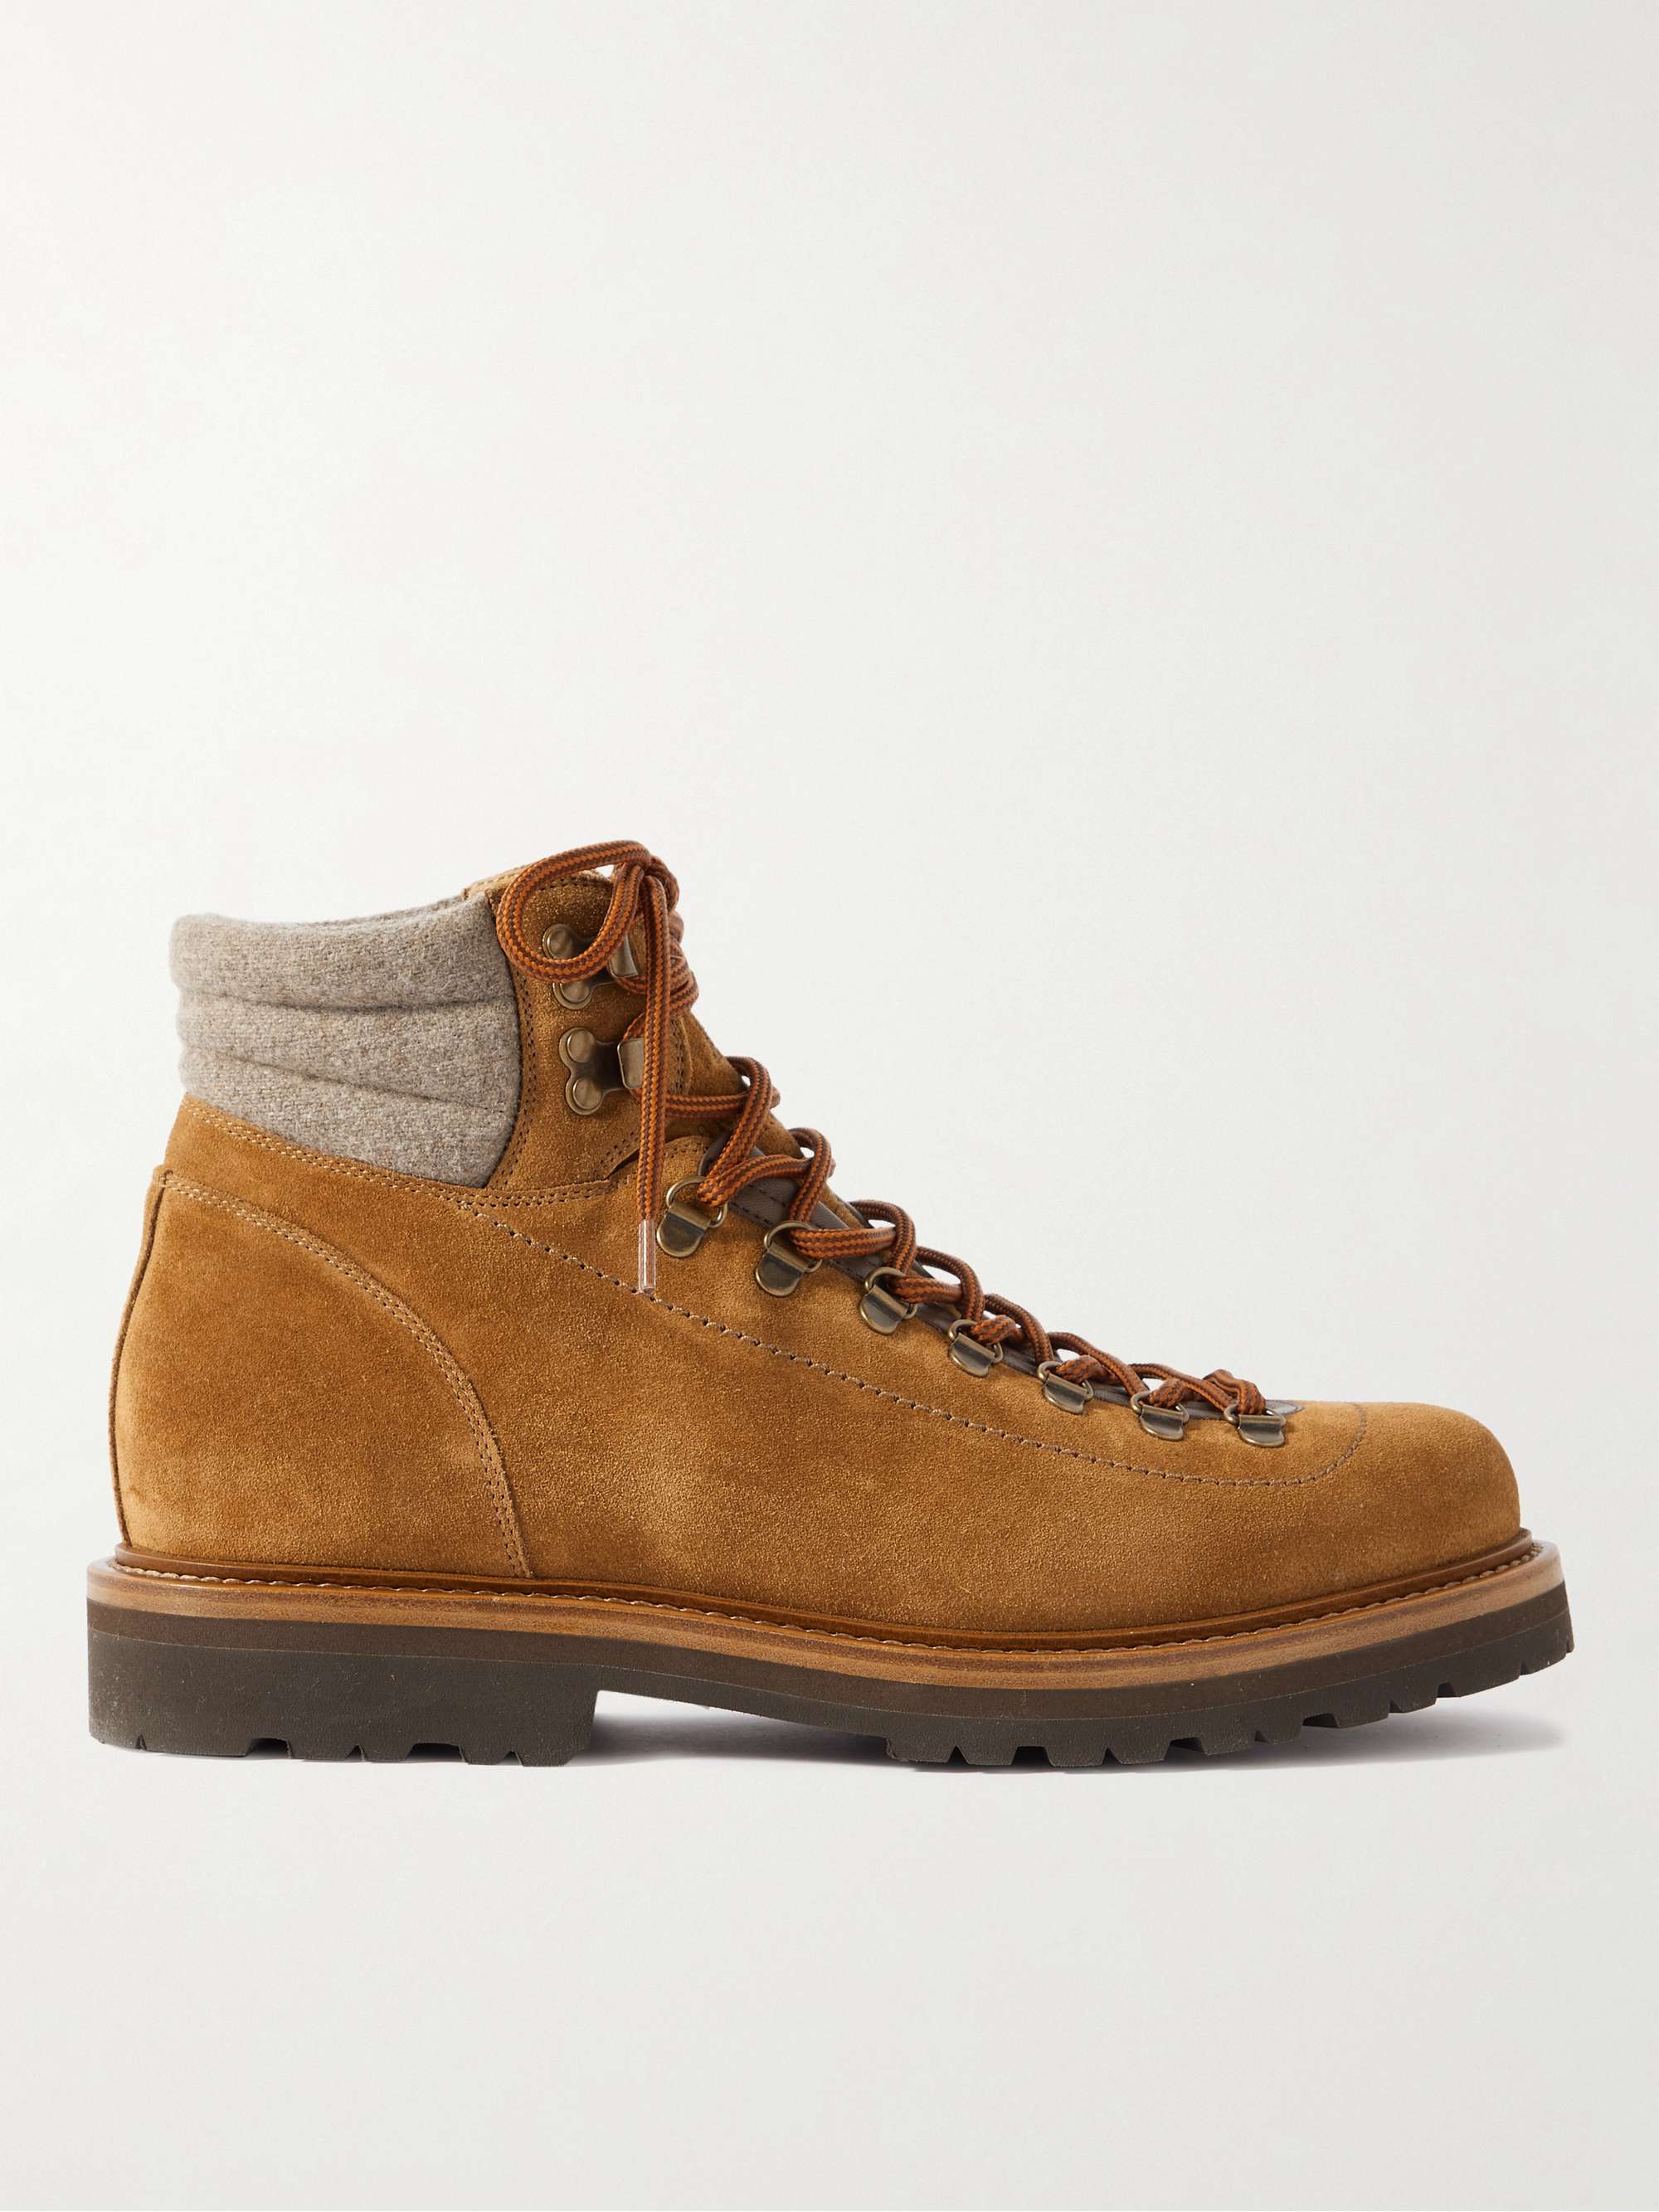 BRUNELLO CUCINELLI Wool-Trimmed Suede Hiking Boots for Men | MR PORTER